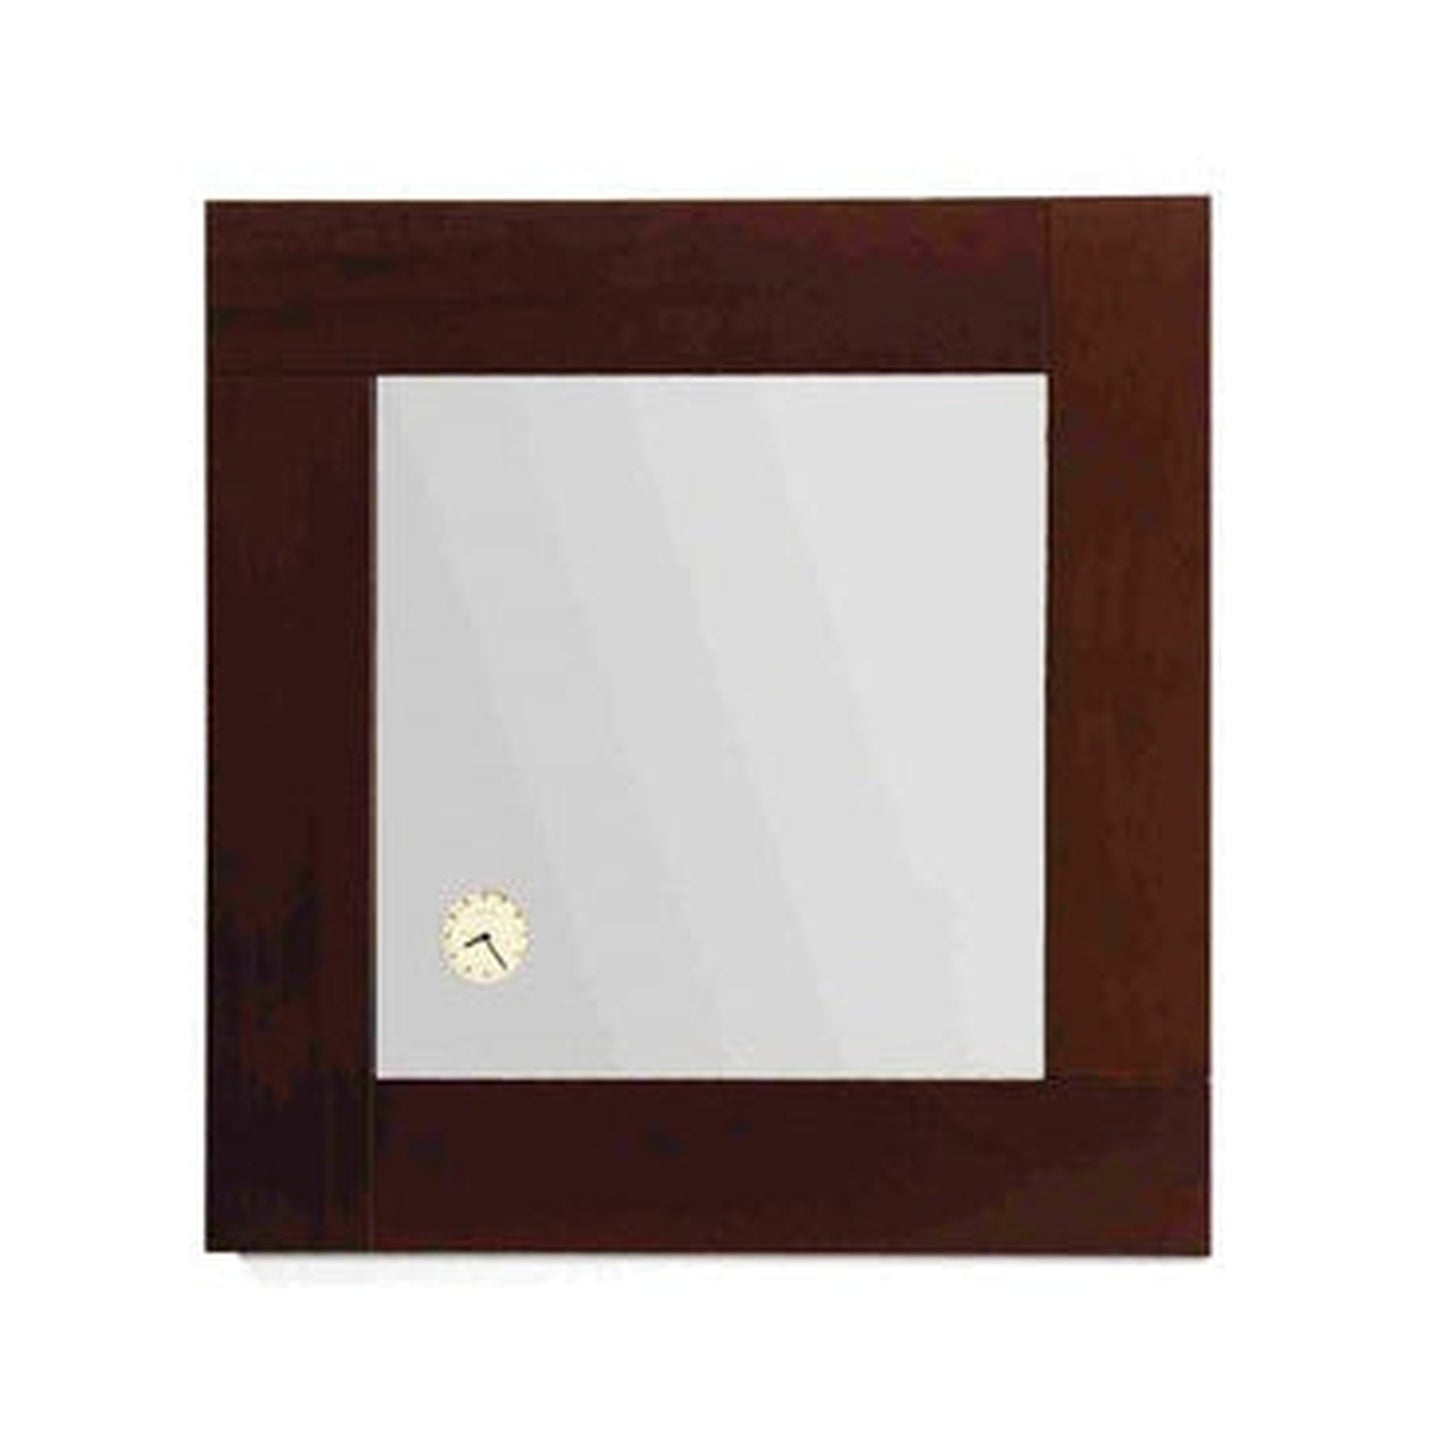 Whitehaus Antonio Miro AMET01 Square Mirror With Iroko Wood Frame and Built-in Clock